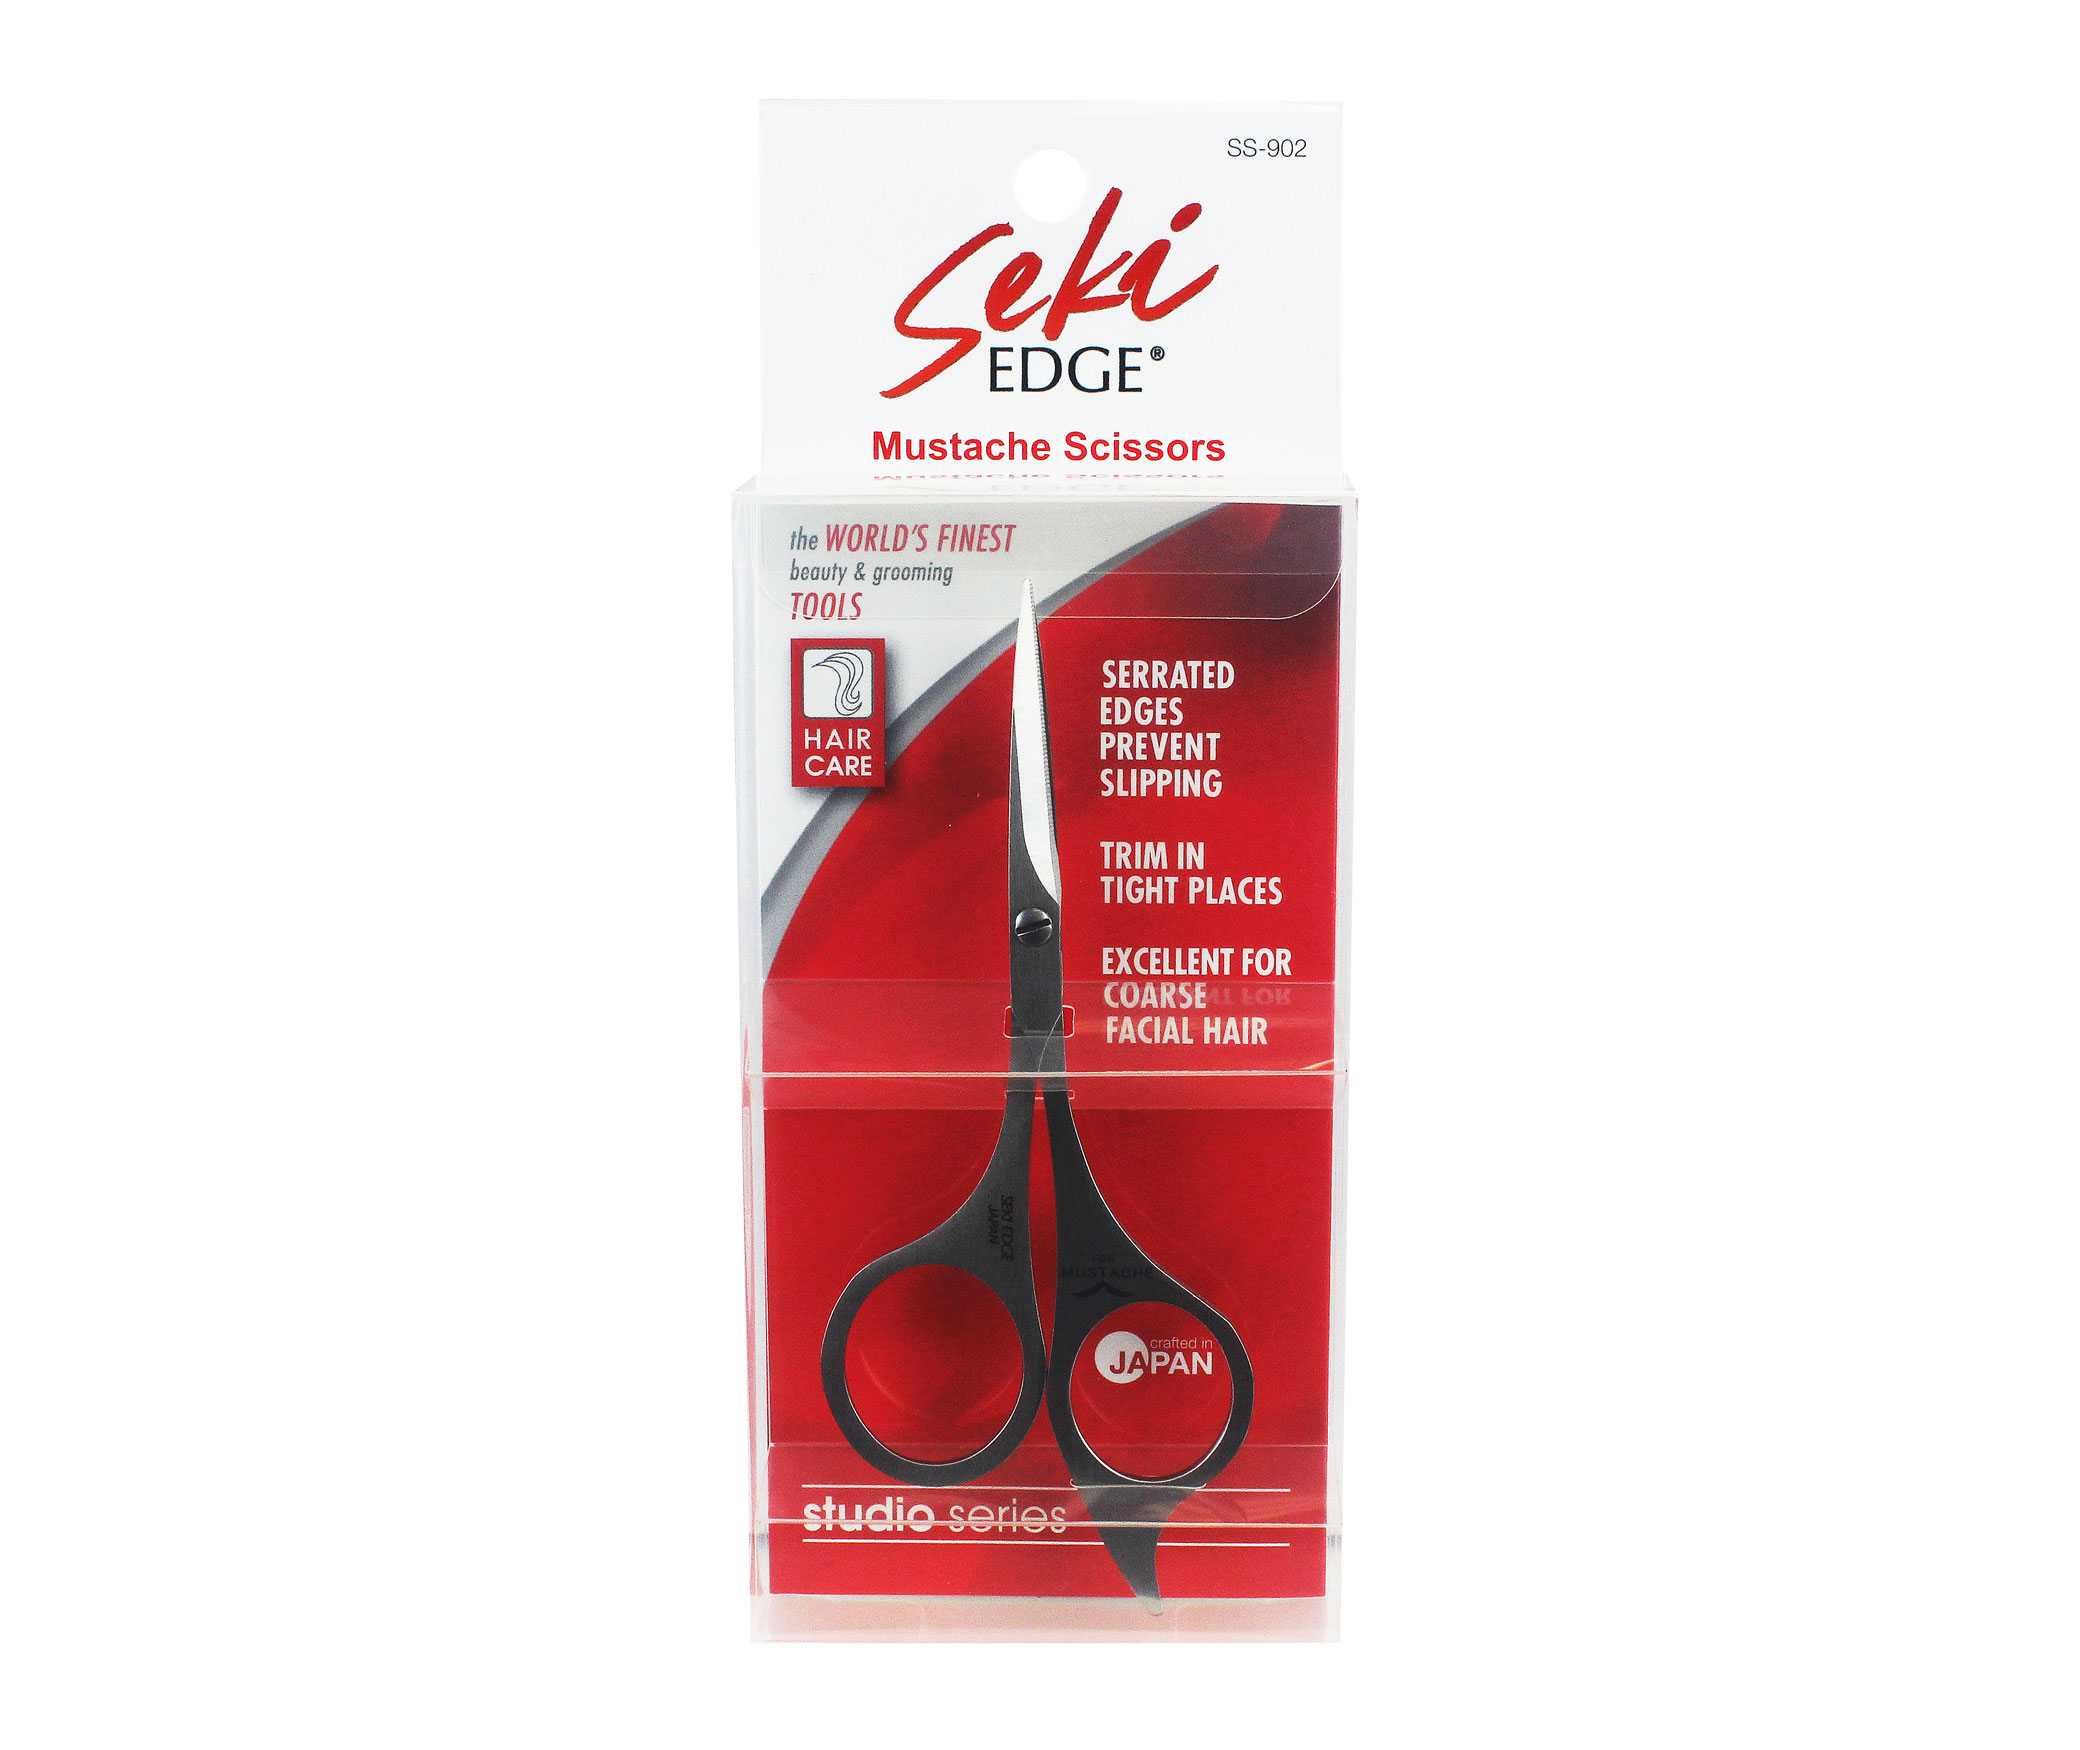 Seki Edge Stainless Steel Moustache and Beard Scissors (SS-902) package